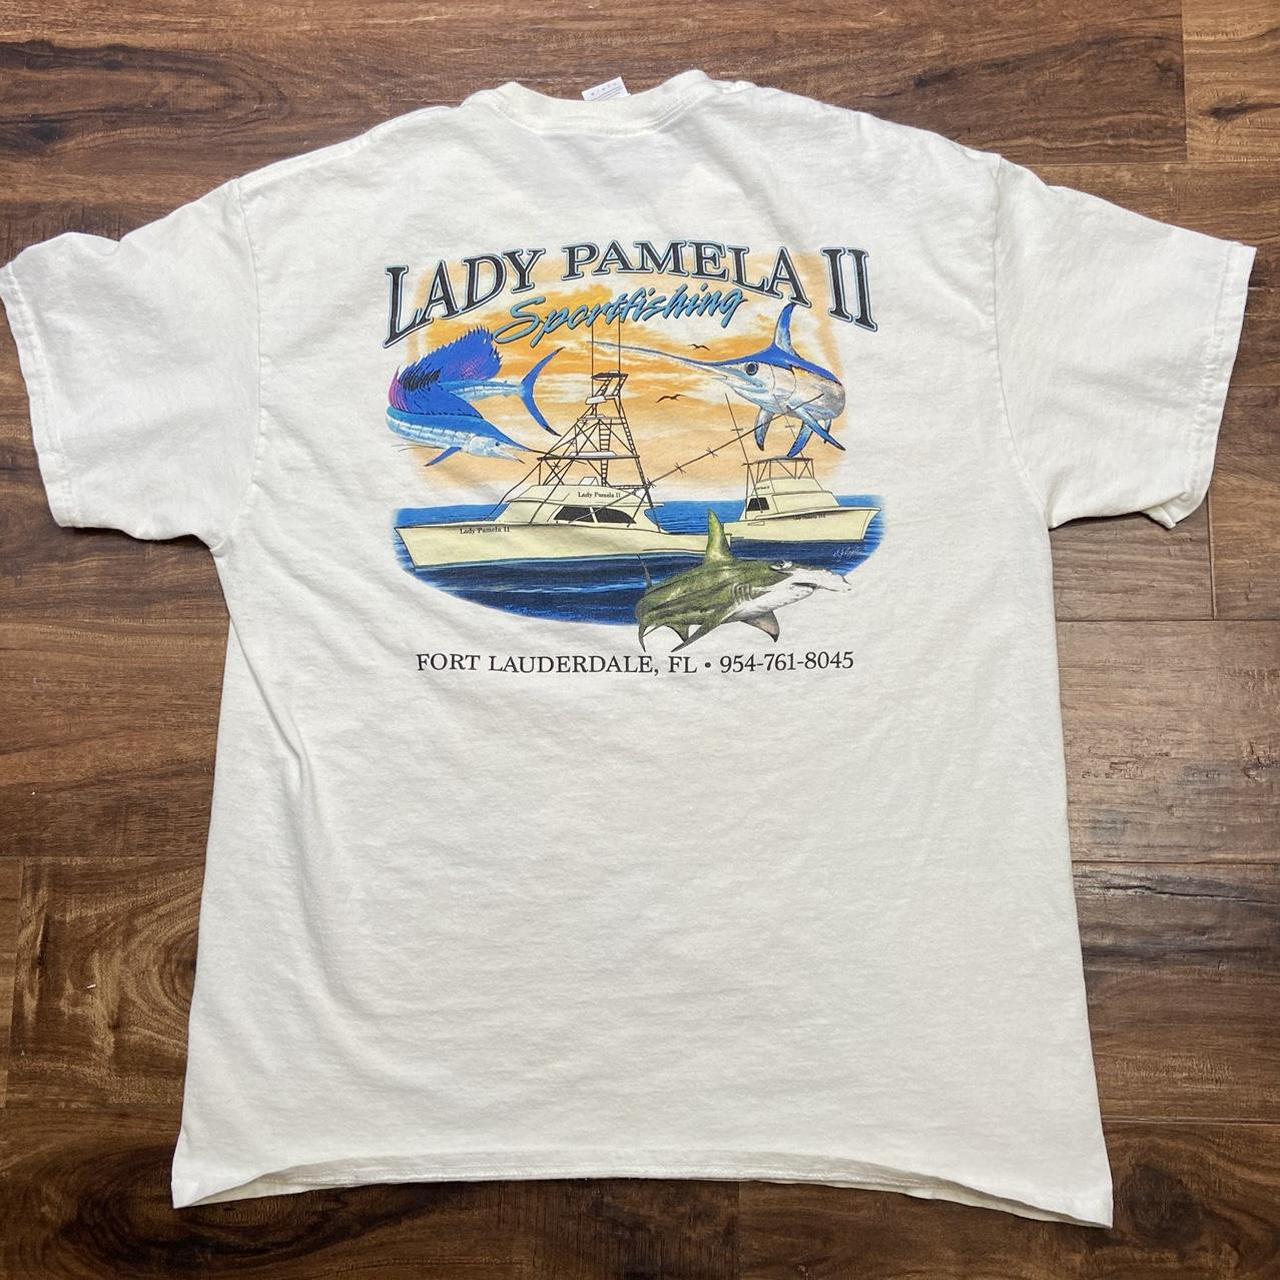 Gildan Brand “Lady Pamela II Sportfishing” graphic - Depop